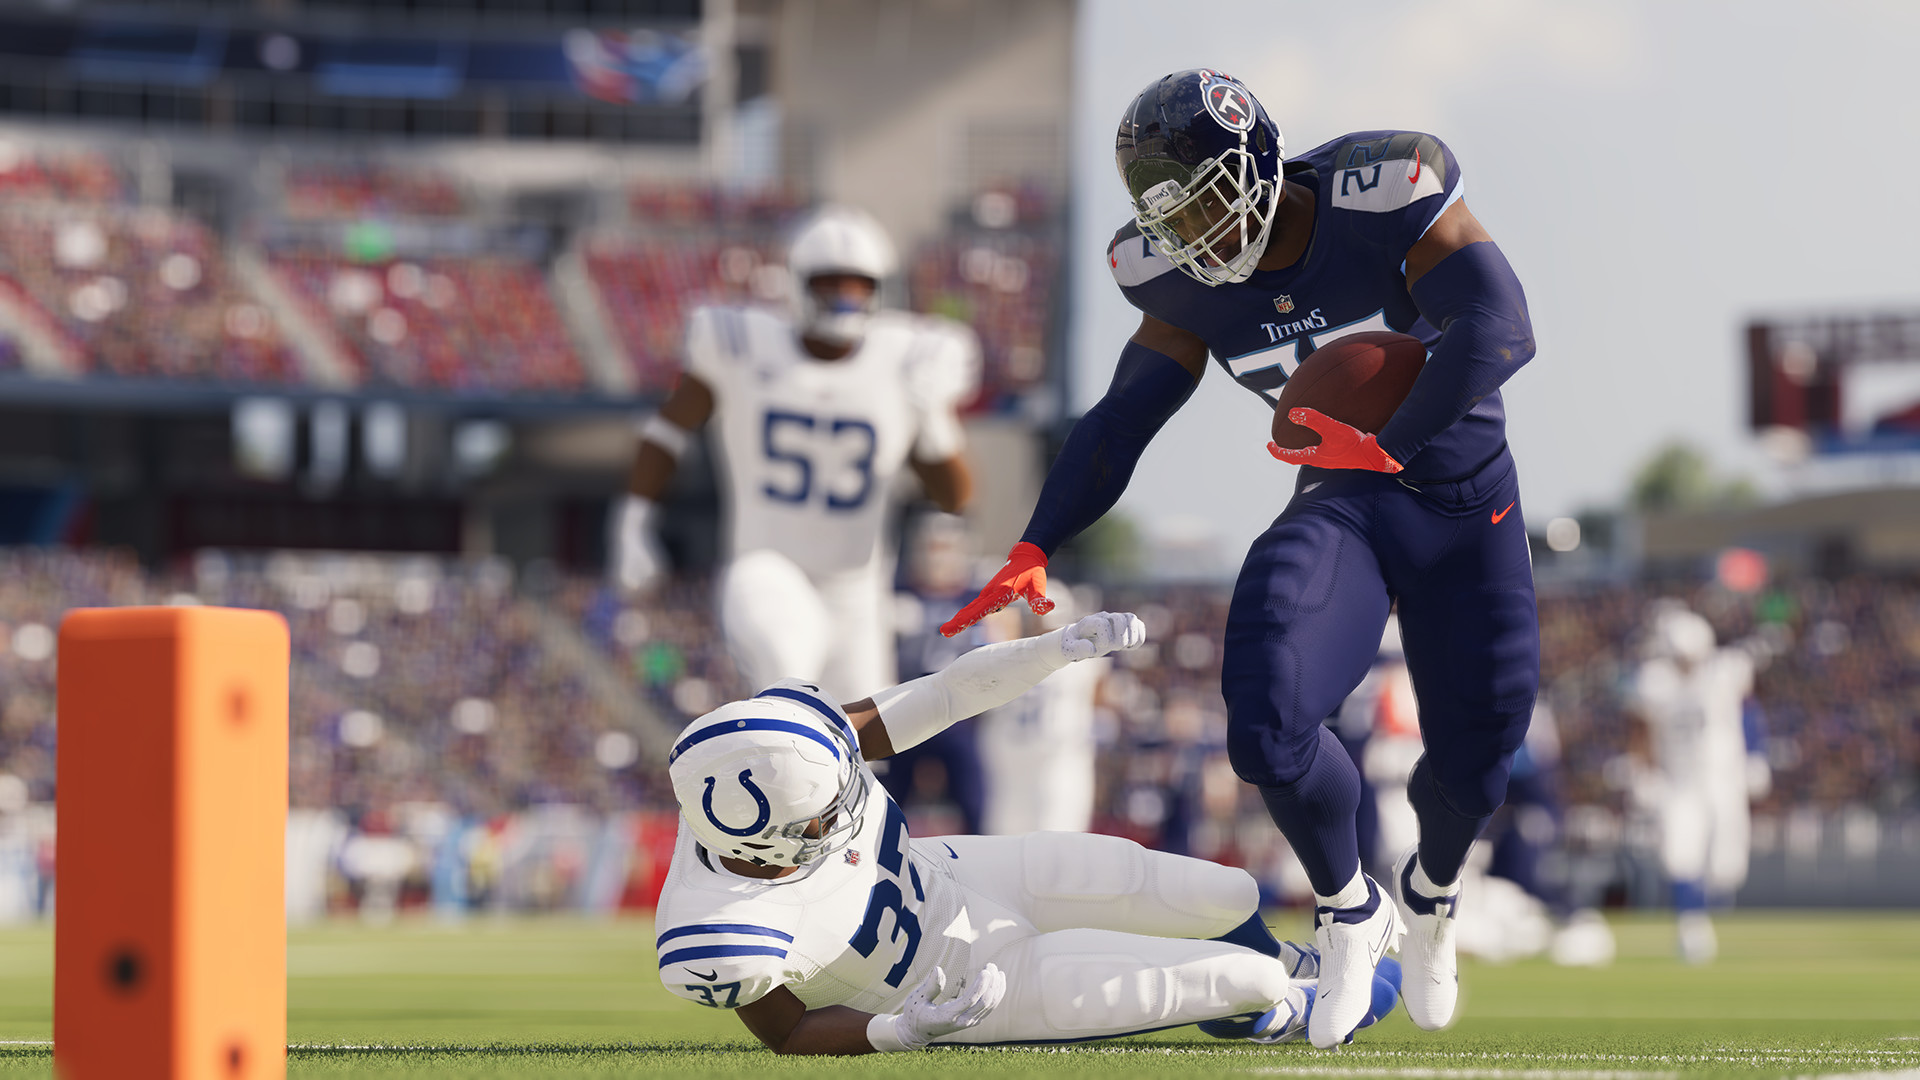 Madden NFL 23 removes CPR touchdown celebration out of respect for Damar Hamlin